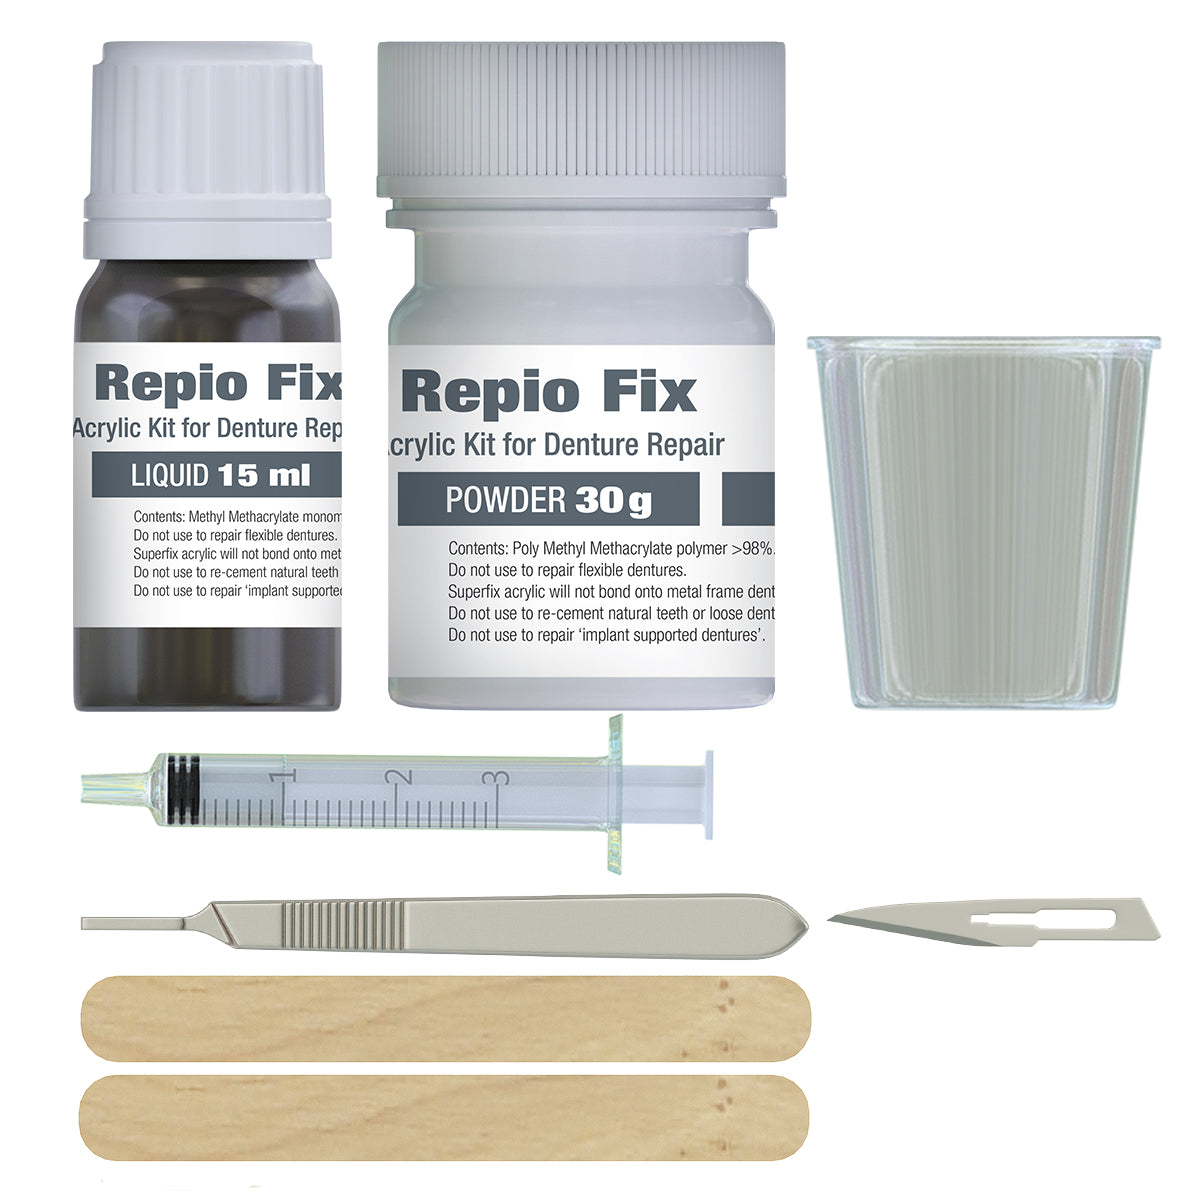 DSI Repio Fix Acrylic Kit for Denture Repair